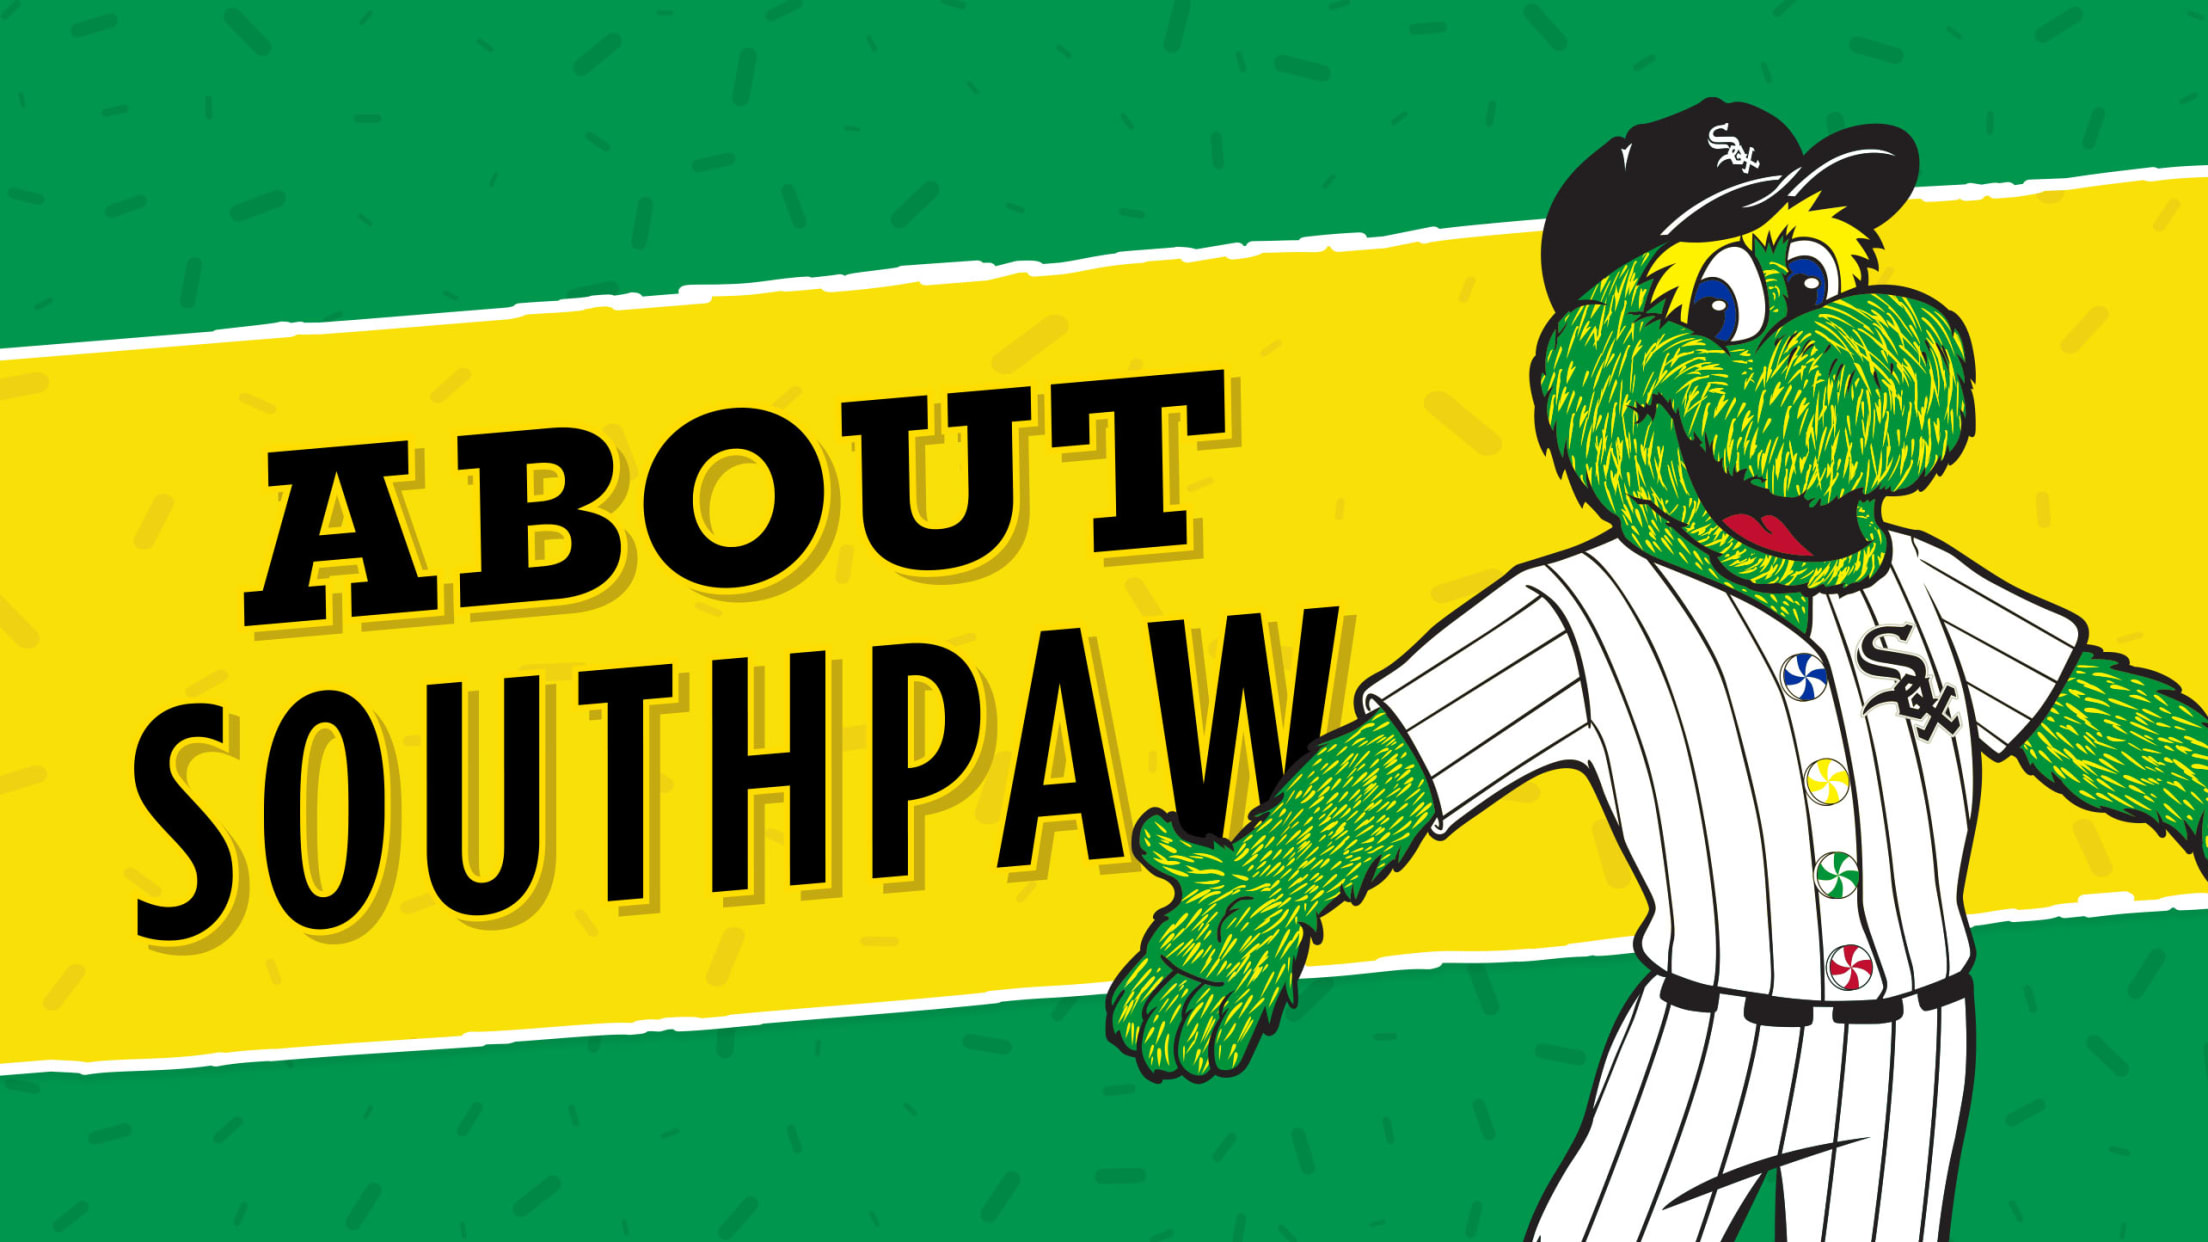 southpaw mascot cartoon